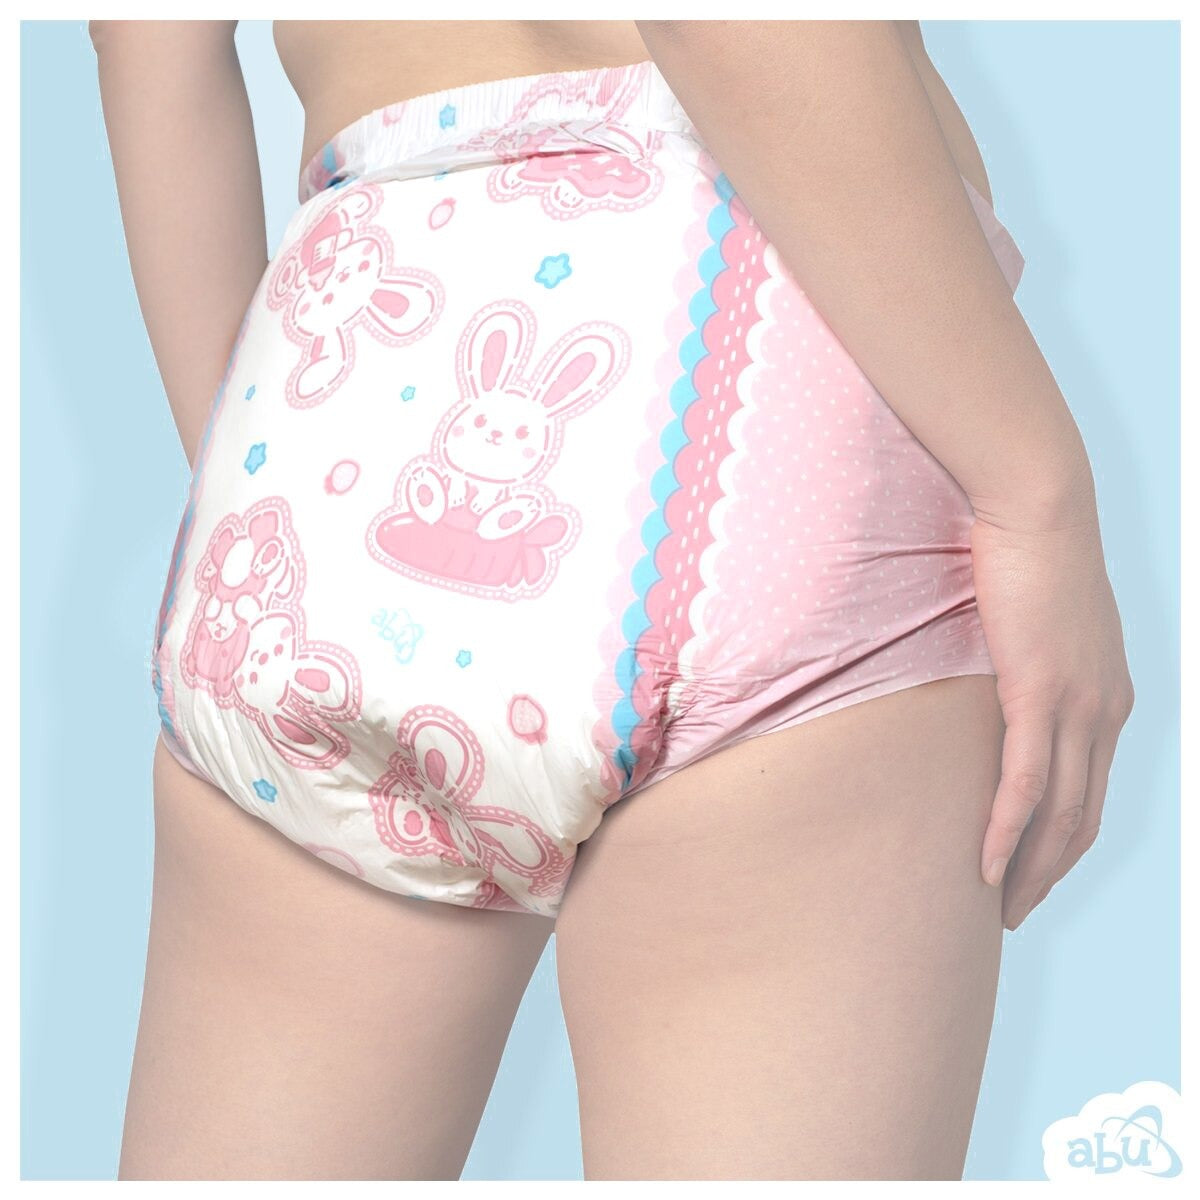 ABDL DDLG Adult Baby Diaper - Sissy Panty Shop